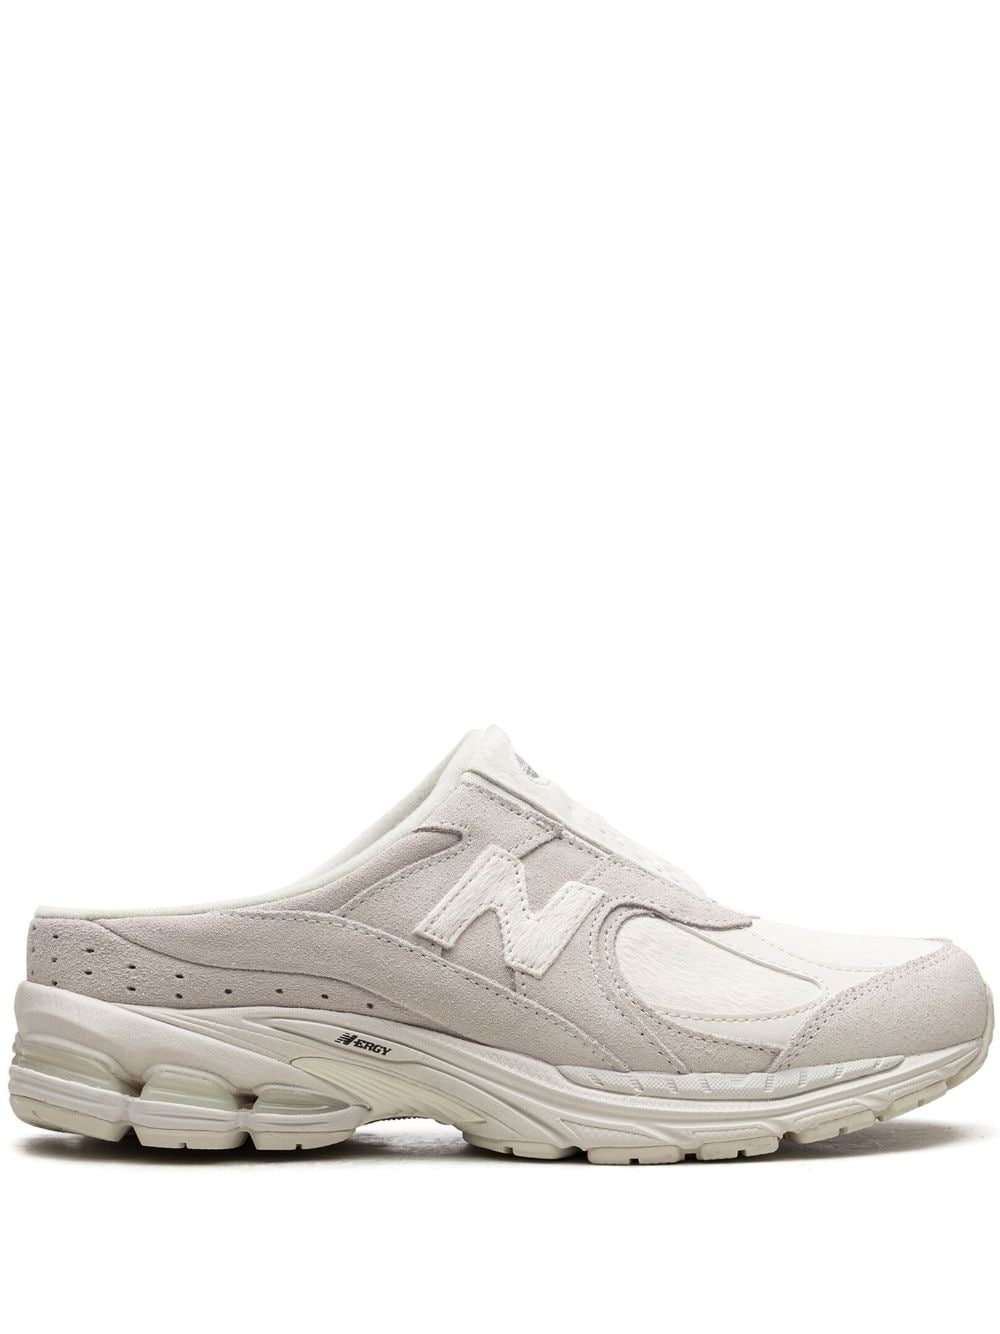 New Balance 2002R "Sea Salt" sneaker mules - Grey